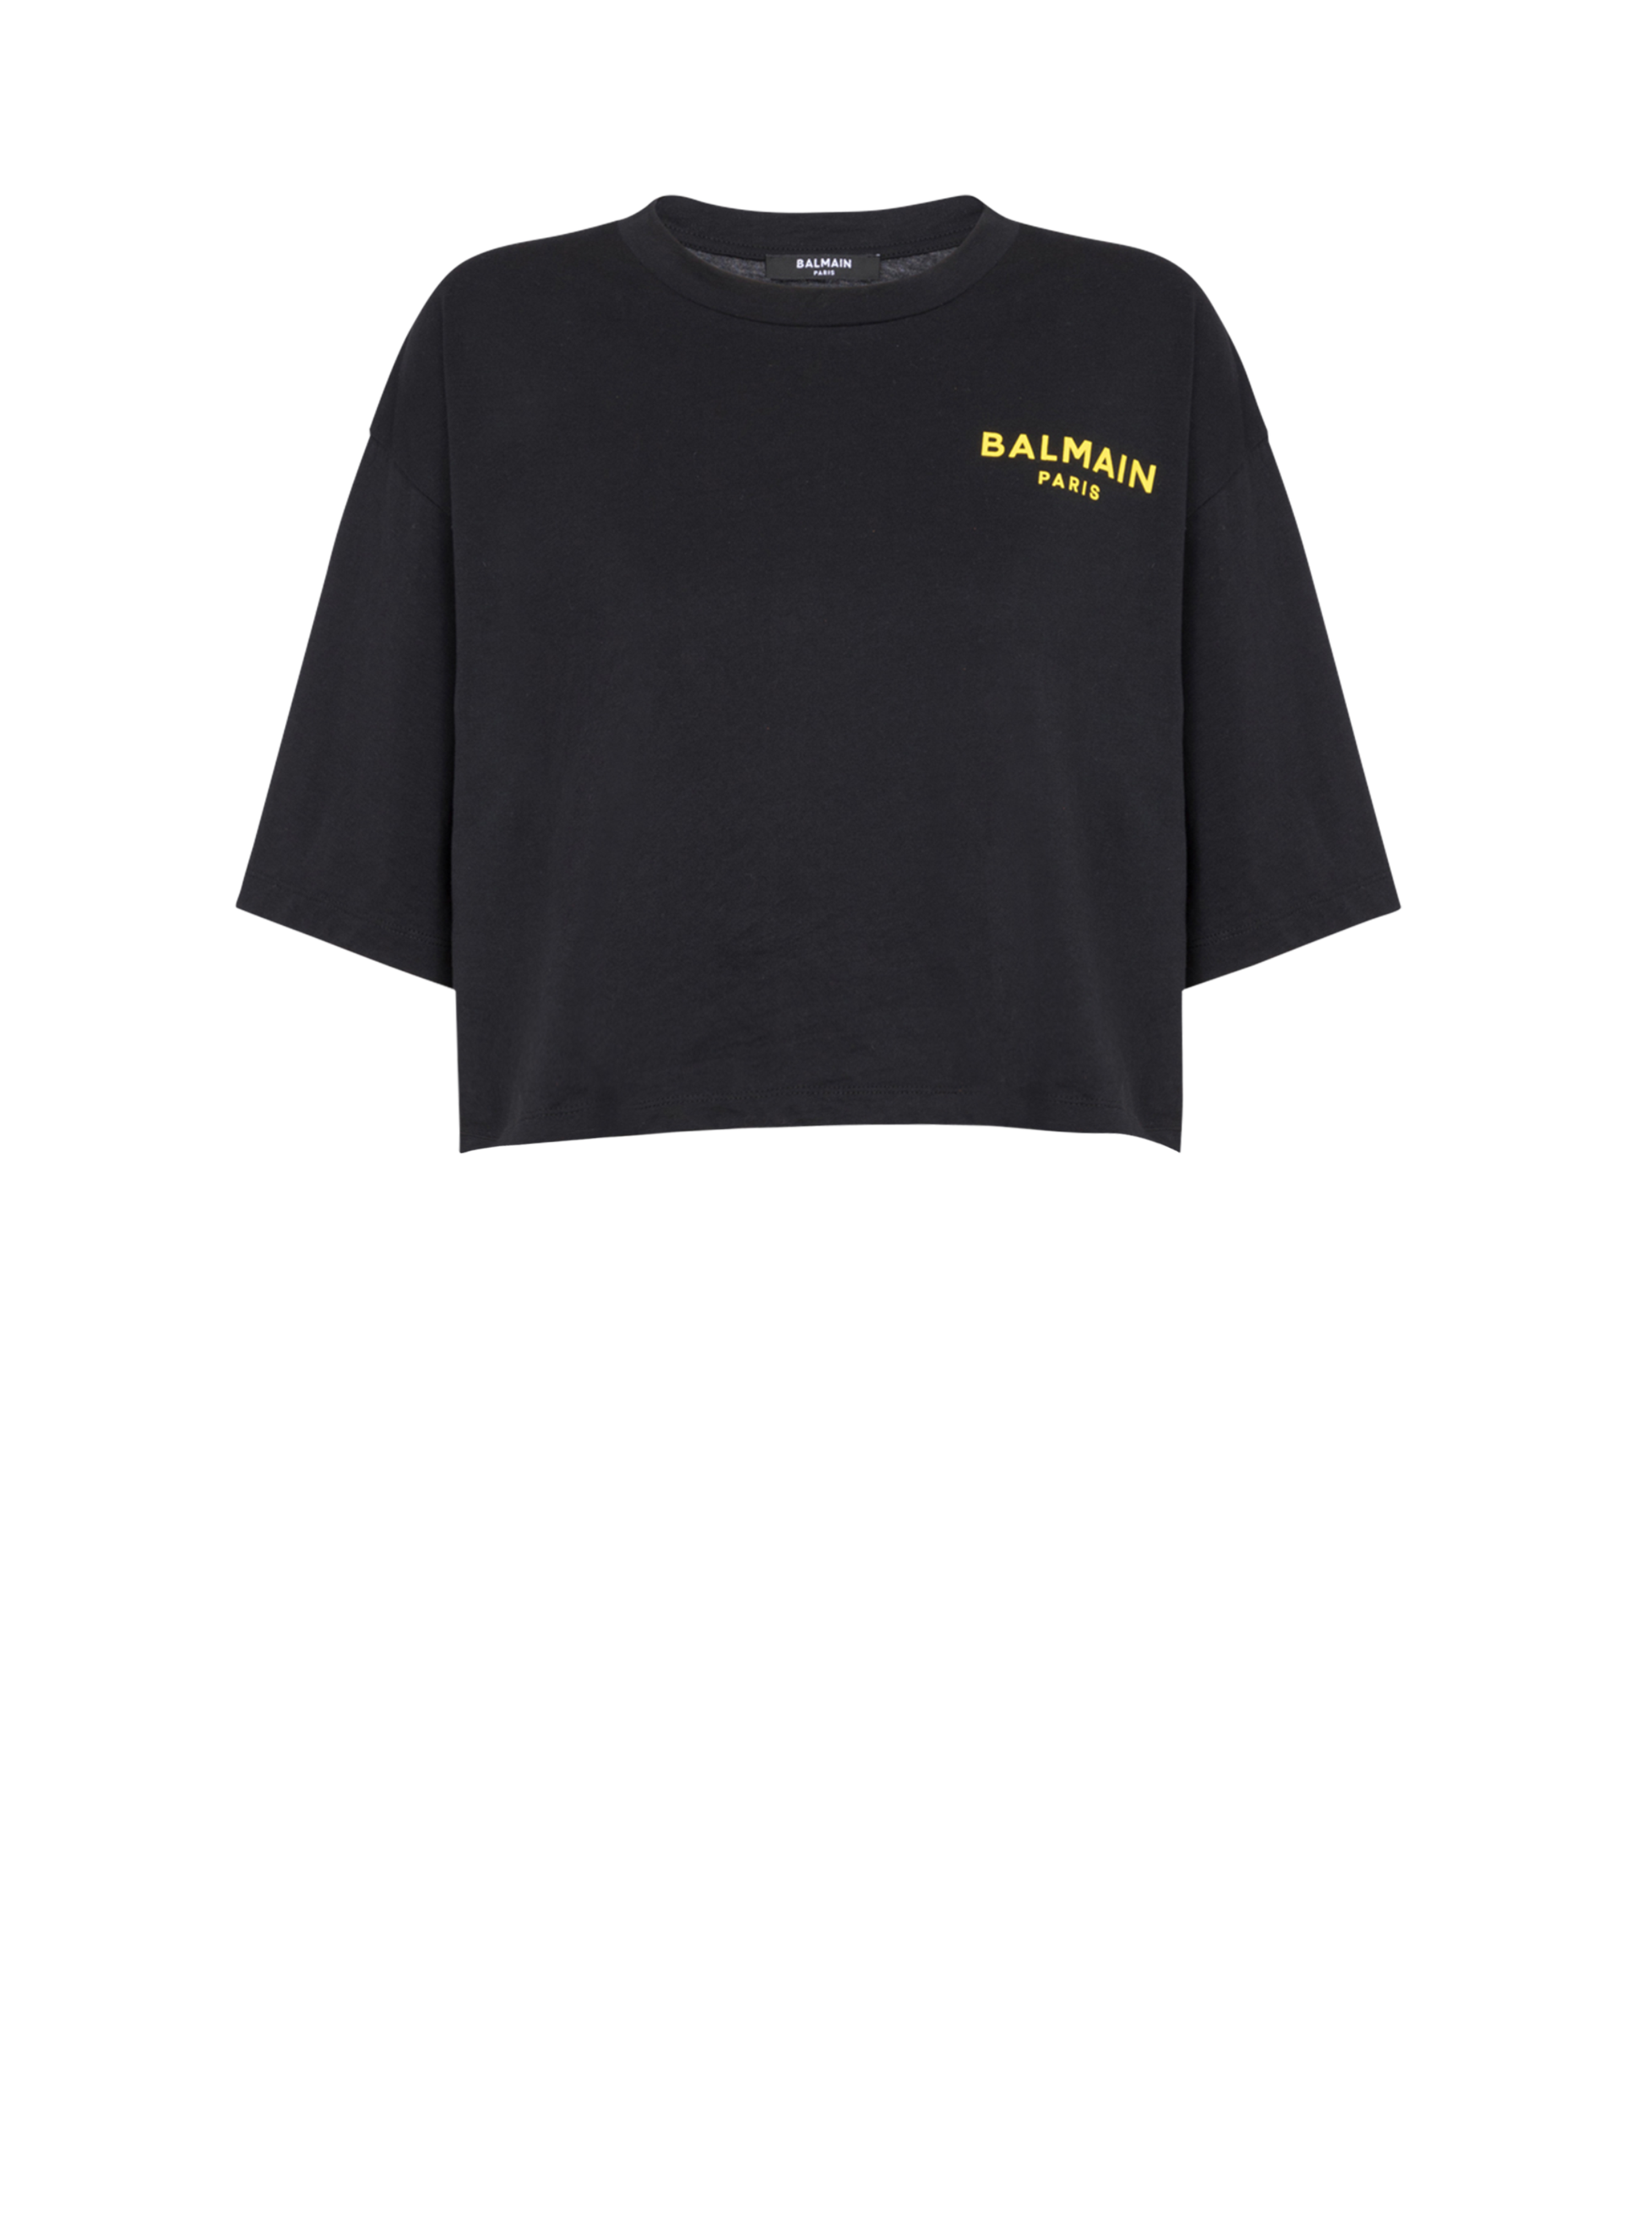 Balmain x Netflix -Cotton cropped T-shirt with small Balmain logo print, black, hi-res